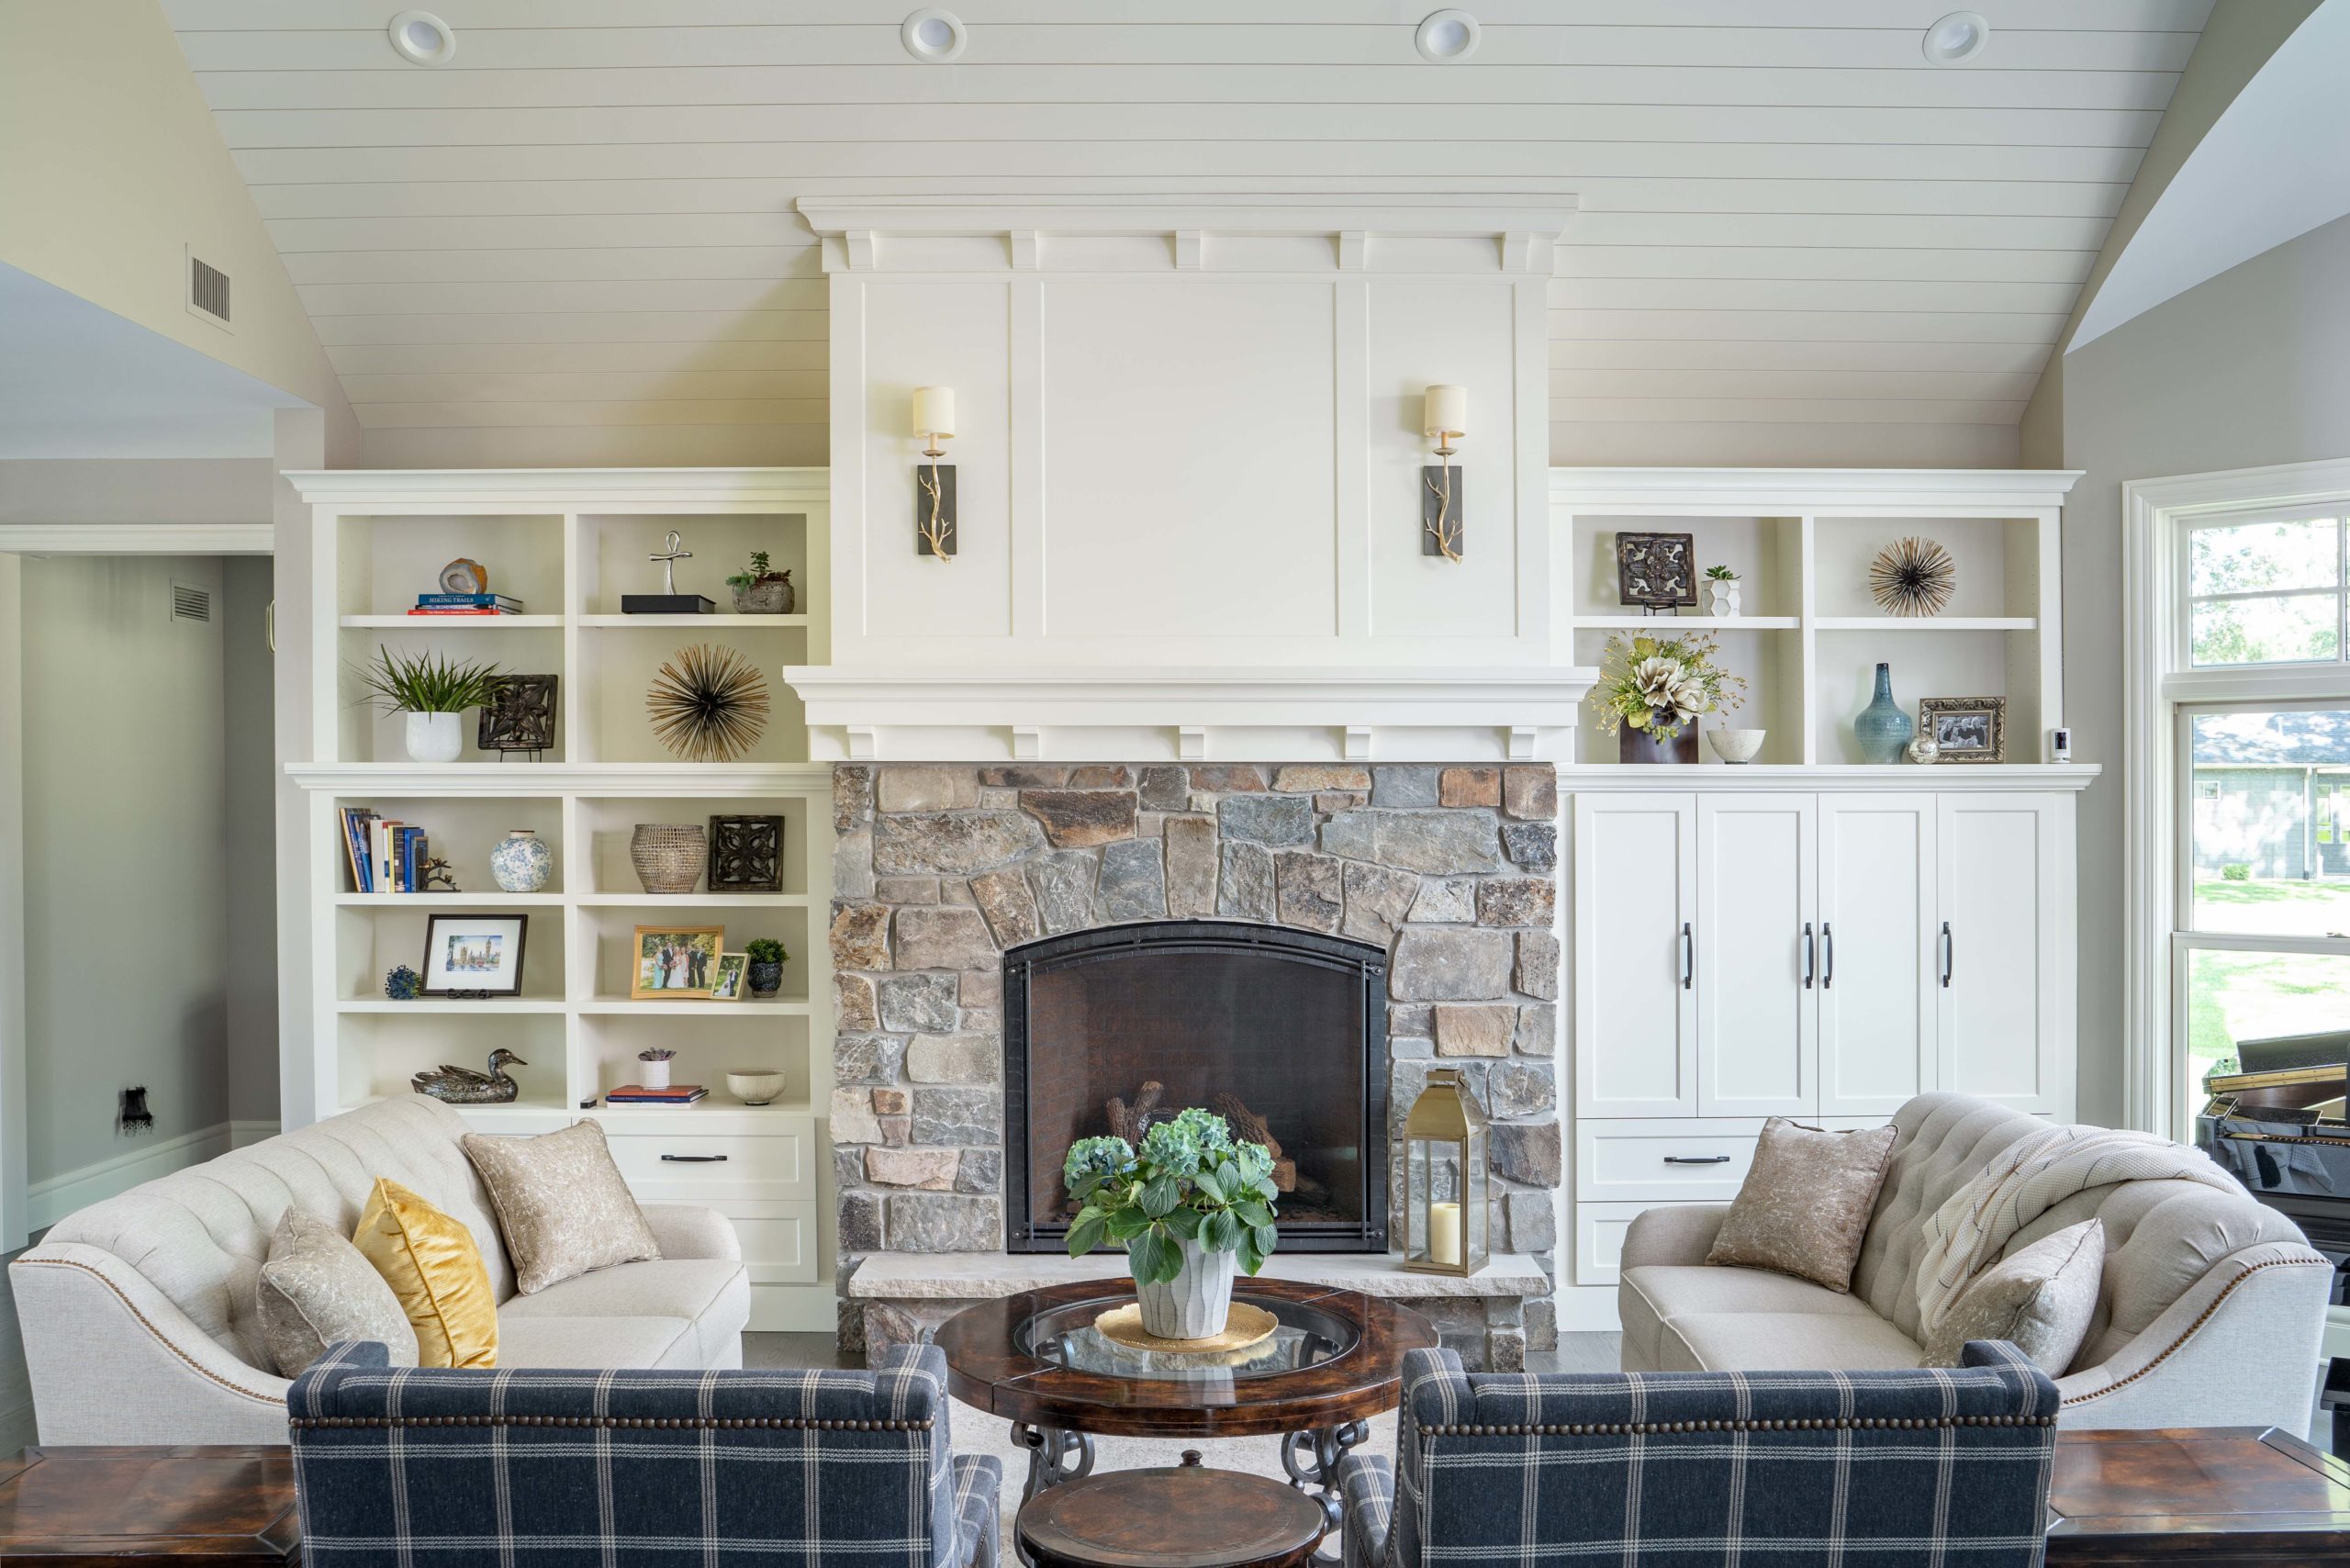 The White Oak Lane living room boasts a cozy fireplace and elegant bookshelves.